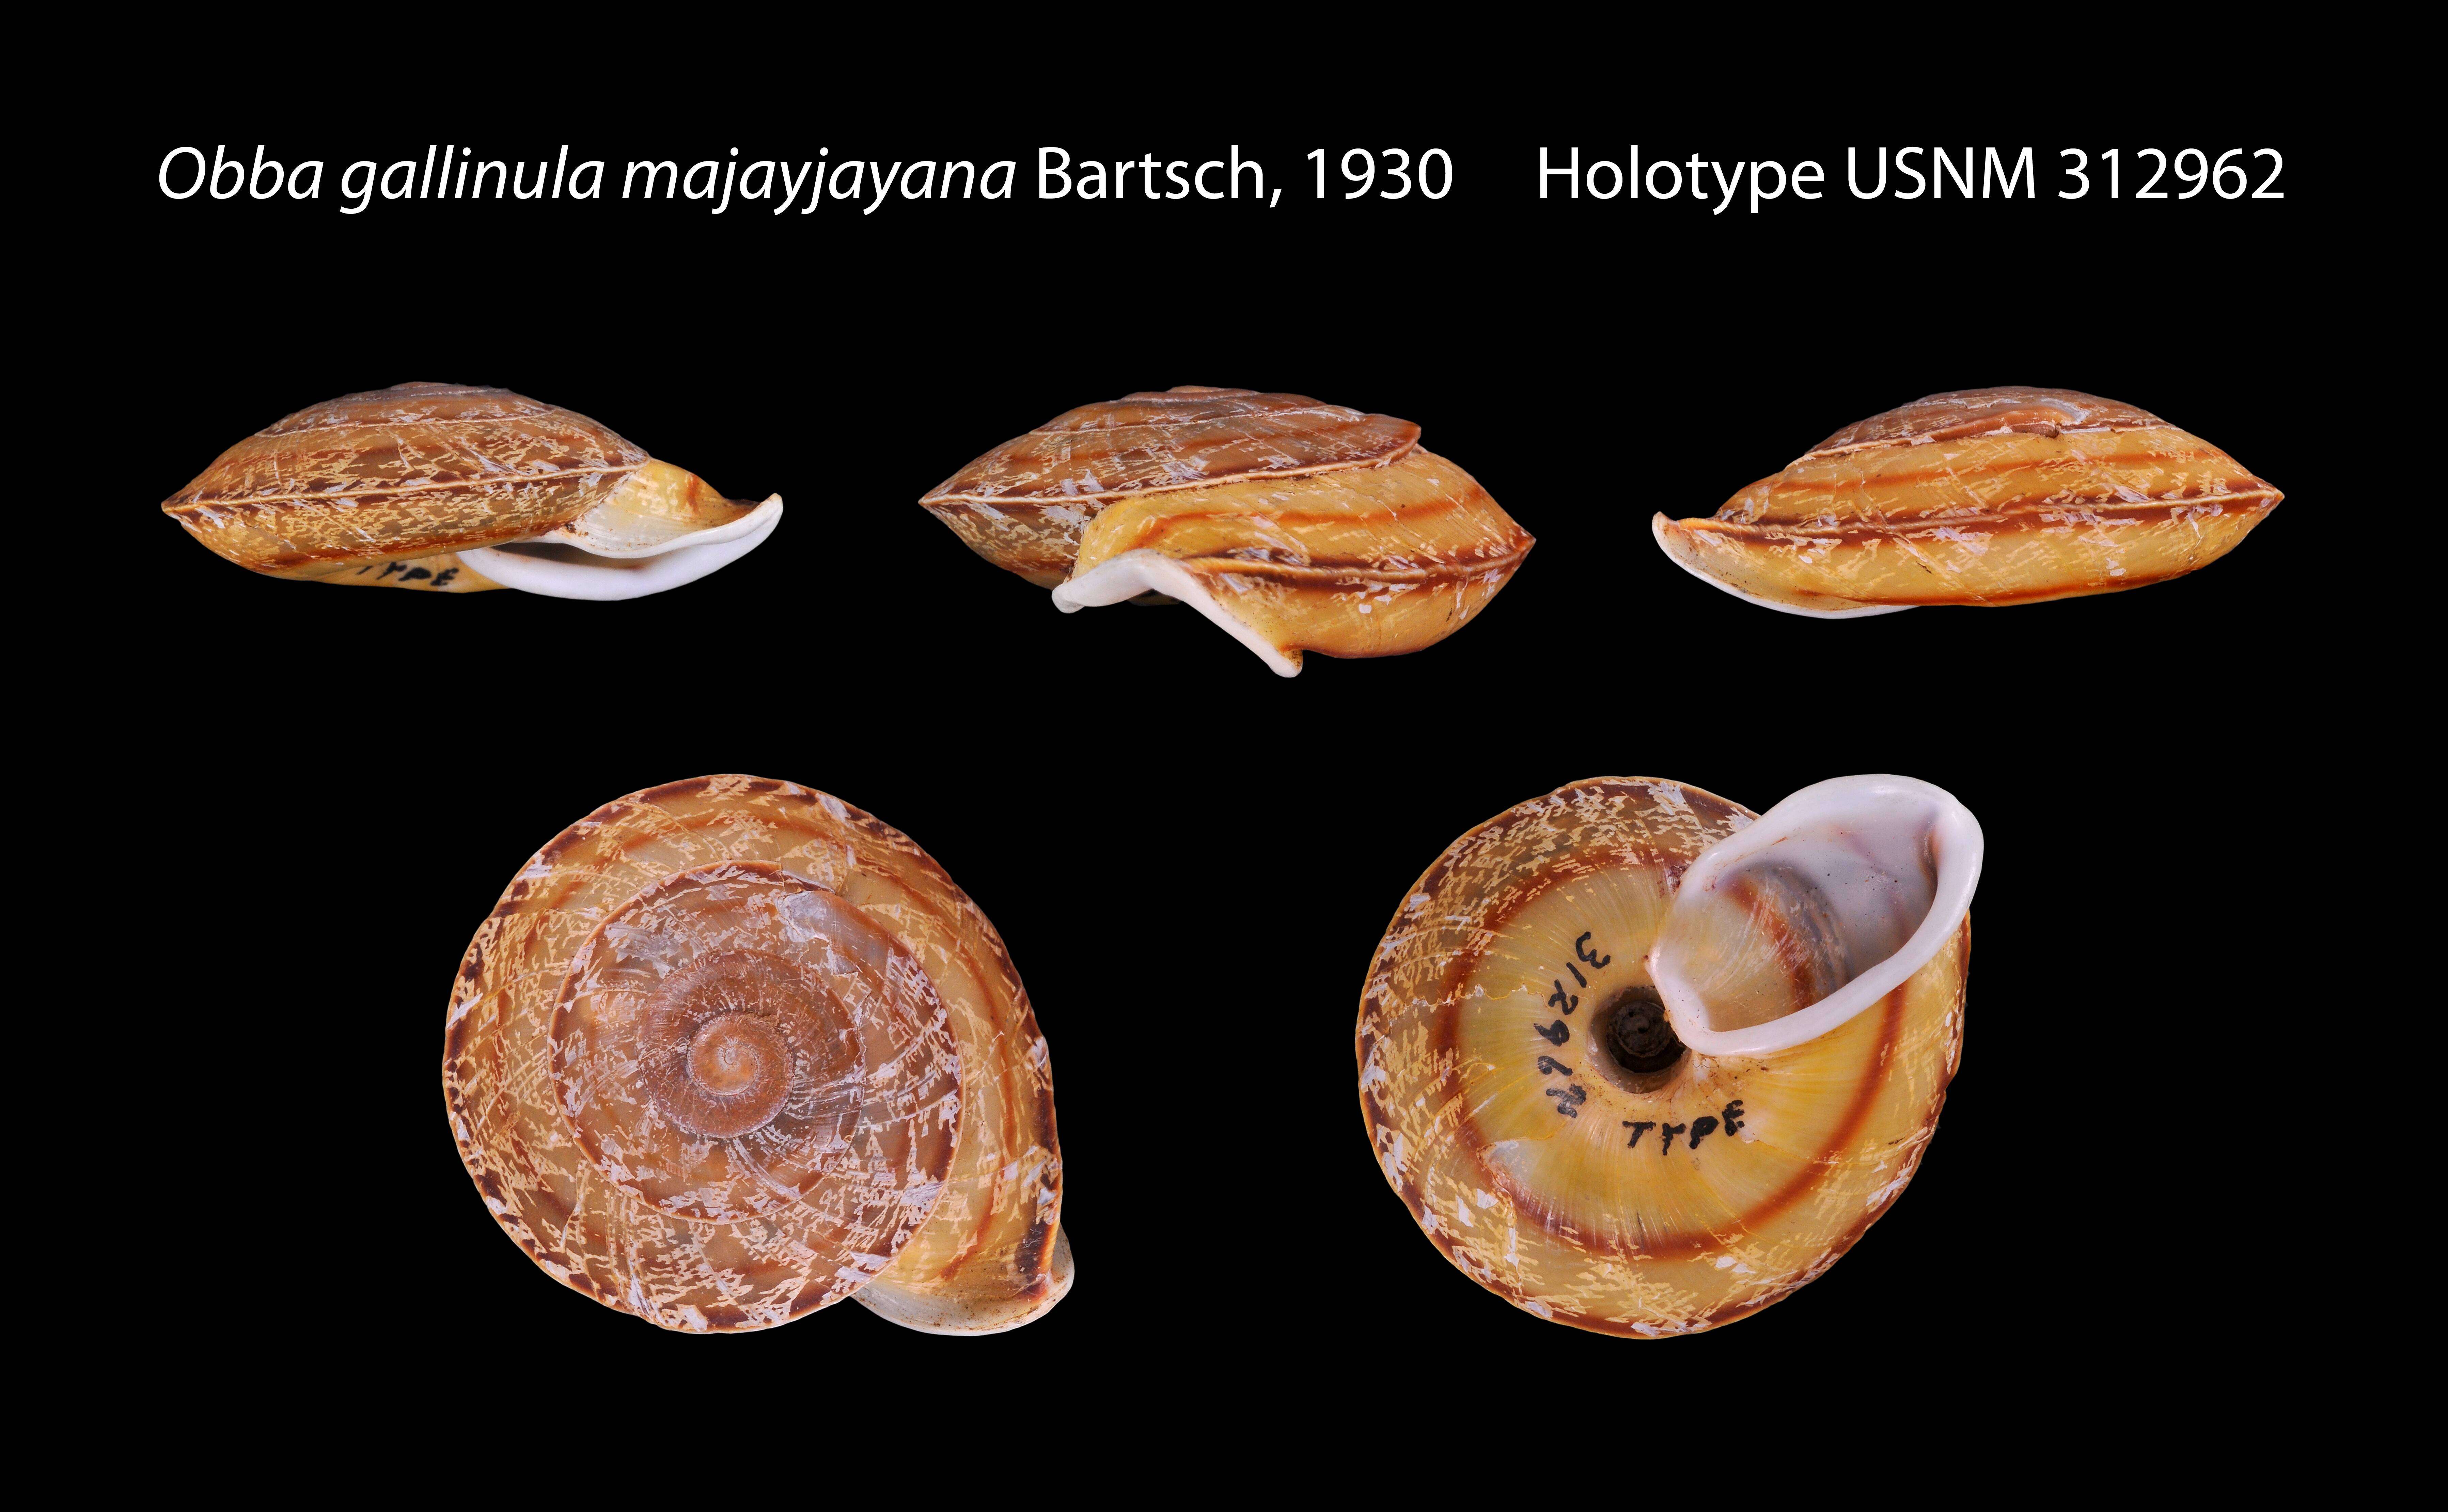 Image of Obba gallinula majayjayana Bartsch 1930